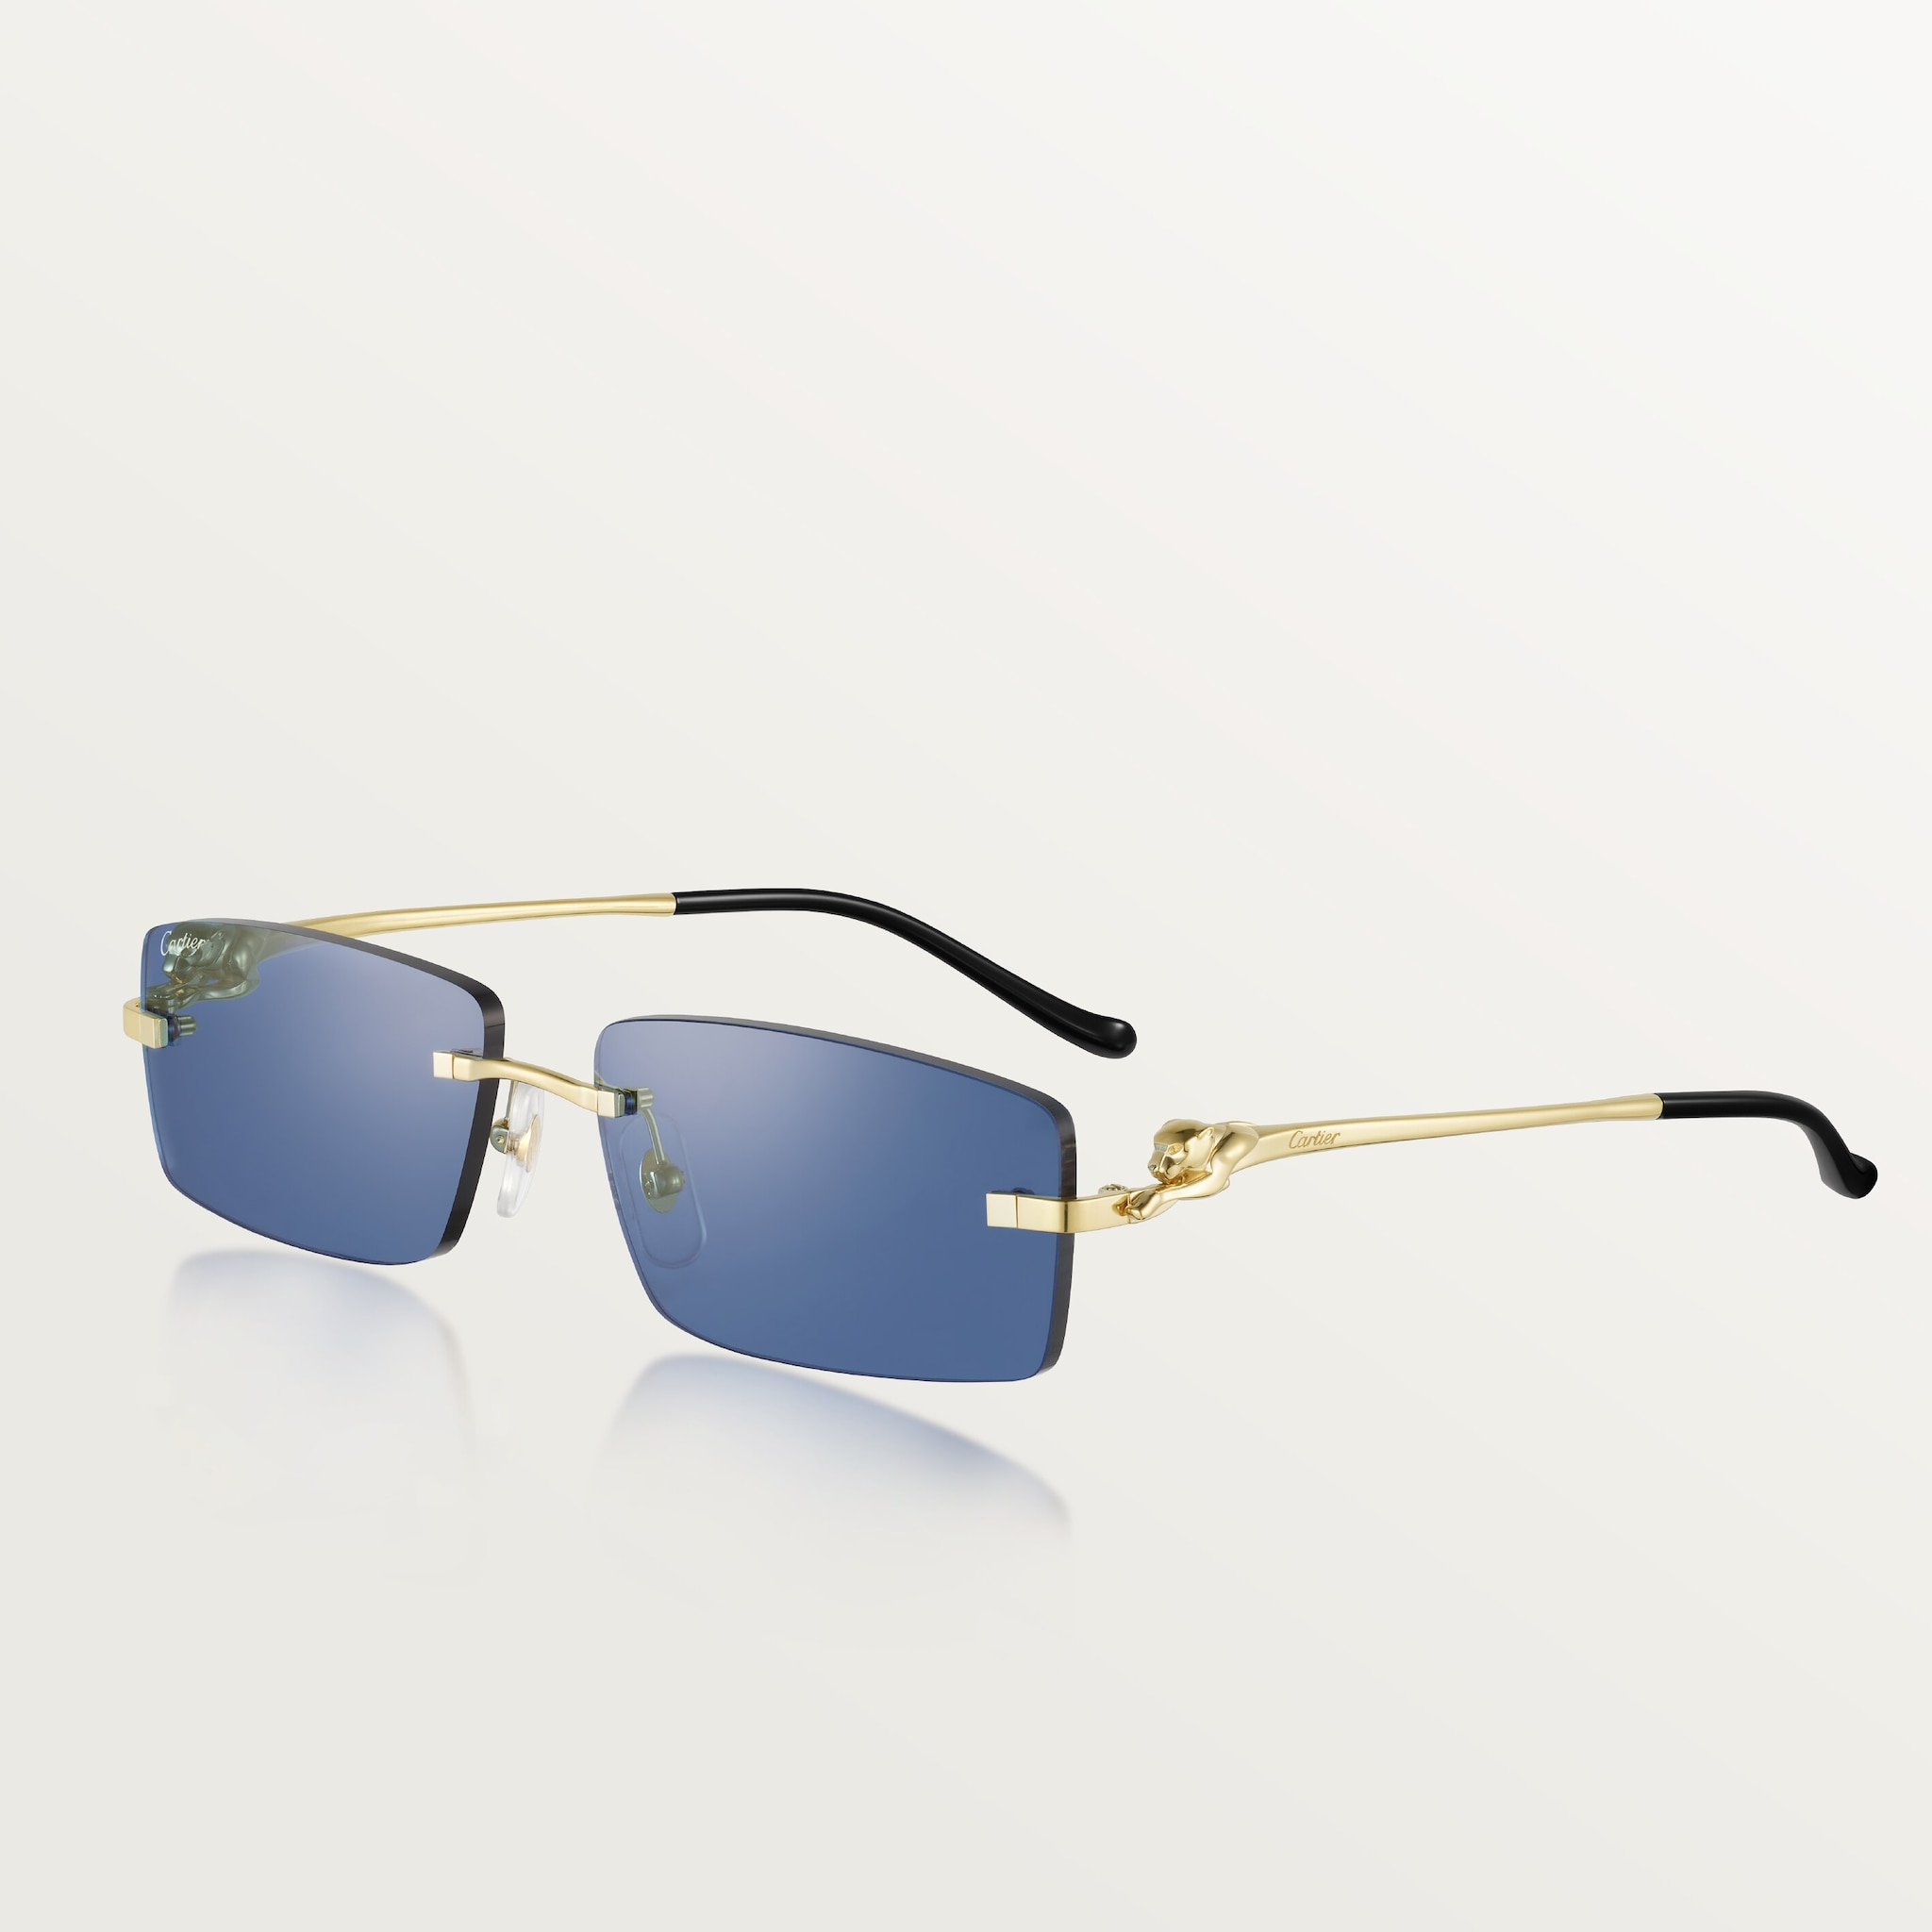 Panthère de Cartier sunglassesSmooth golden-finish metal, blue lenses